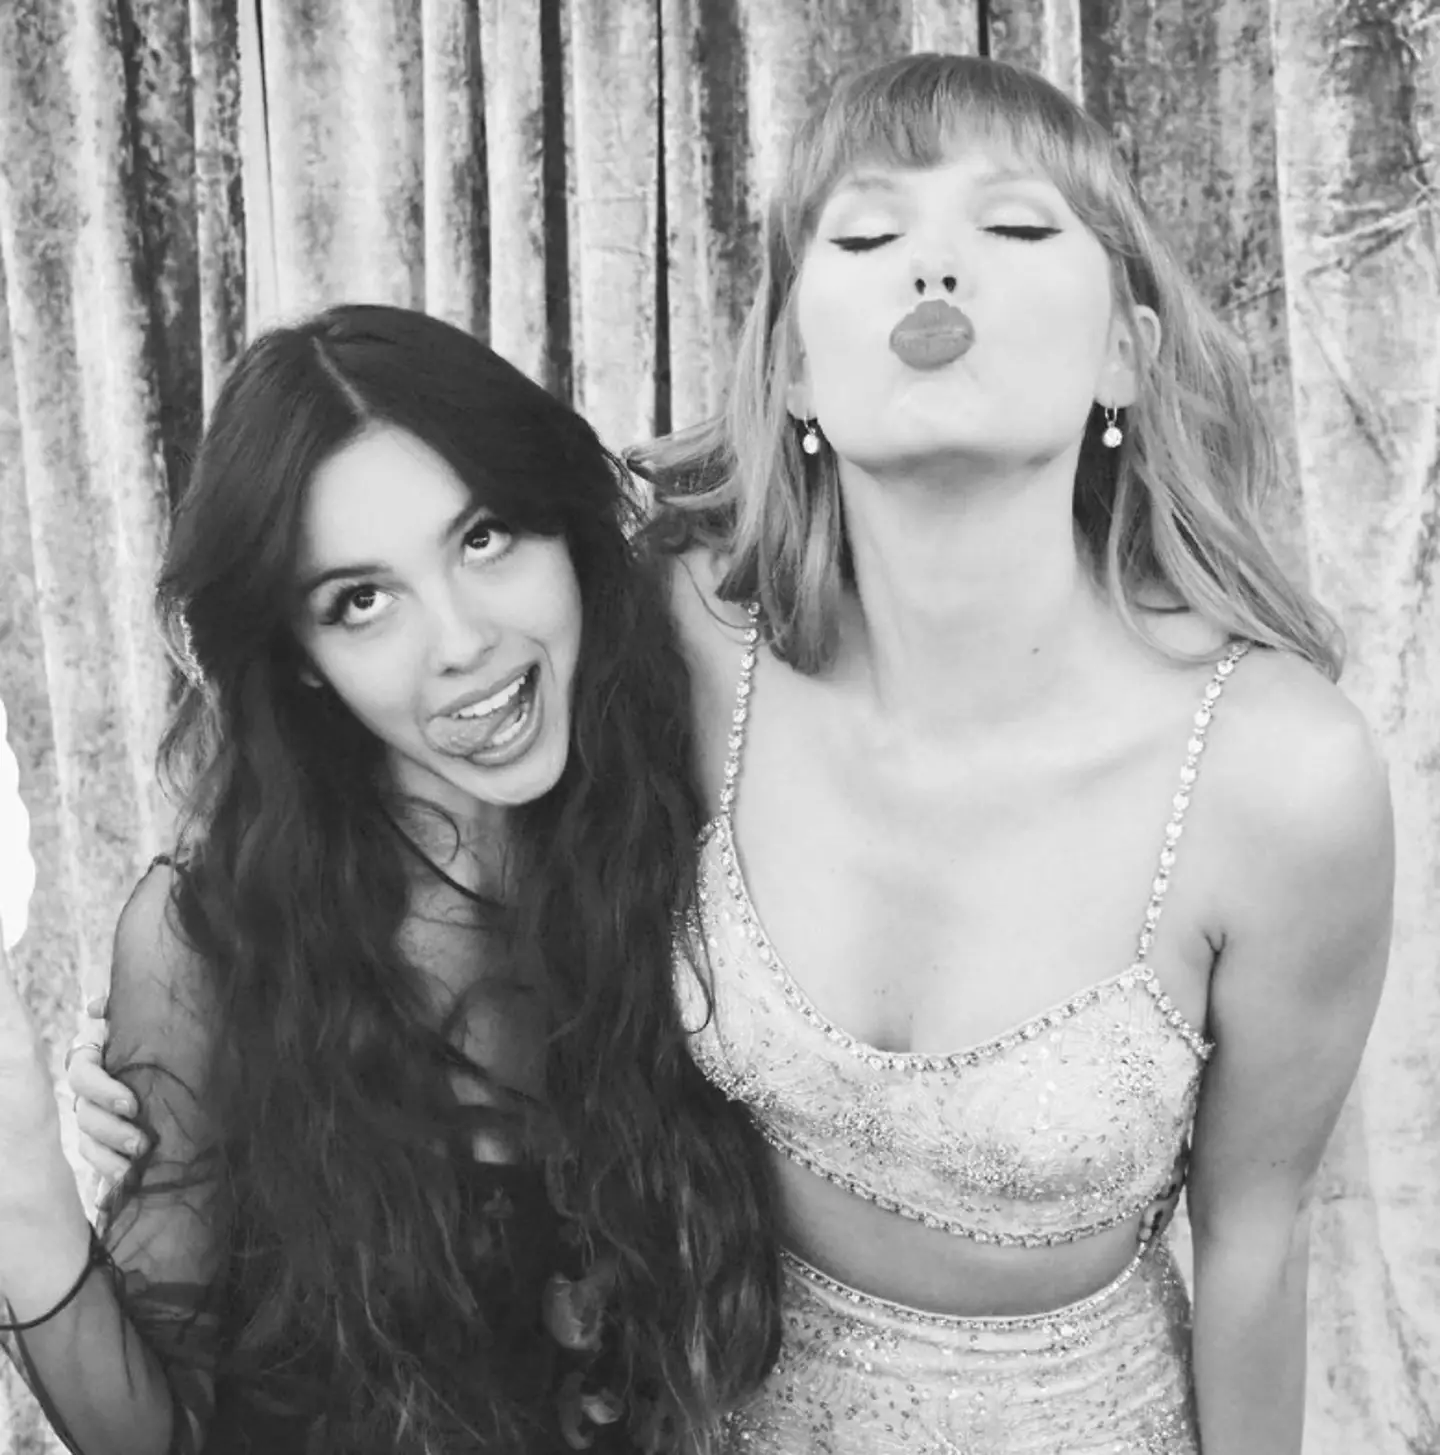 Olivia Rodrigo has addressed the rumored feud between herself and Taylor Swift.